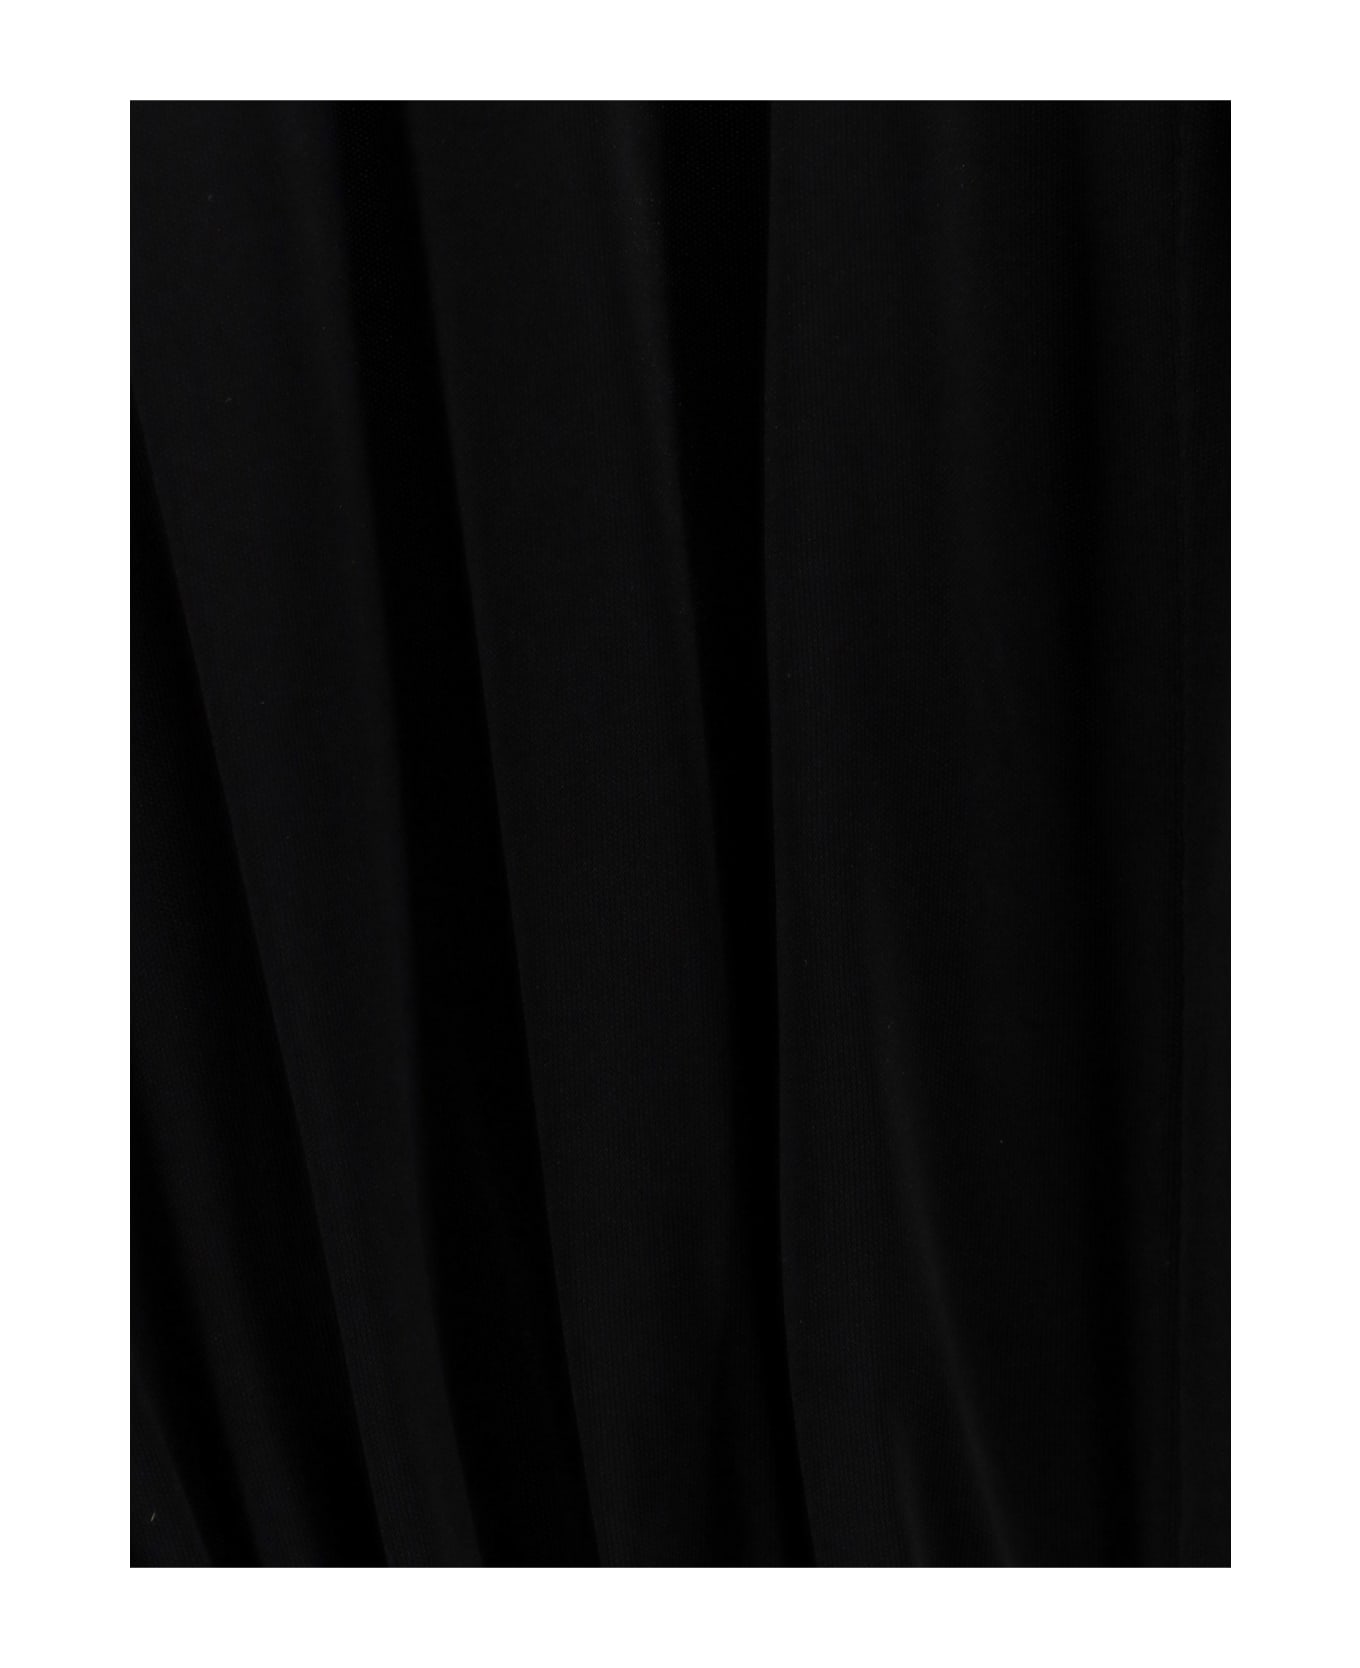 SEMICOUTURE Dress - Black